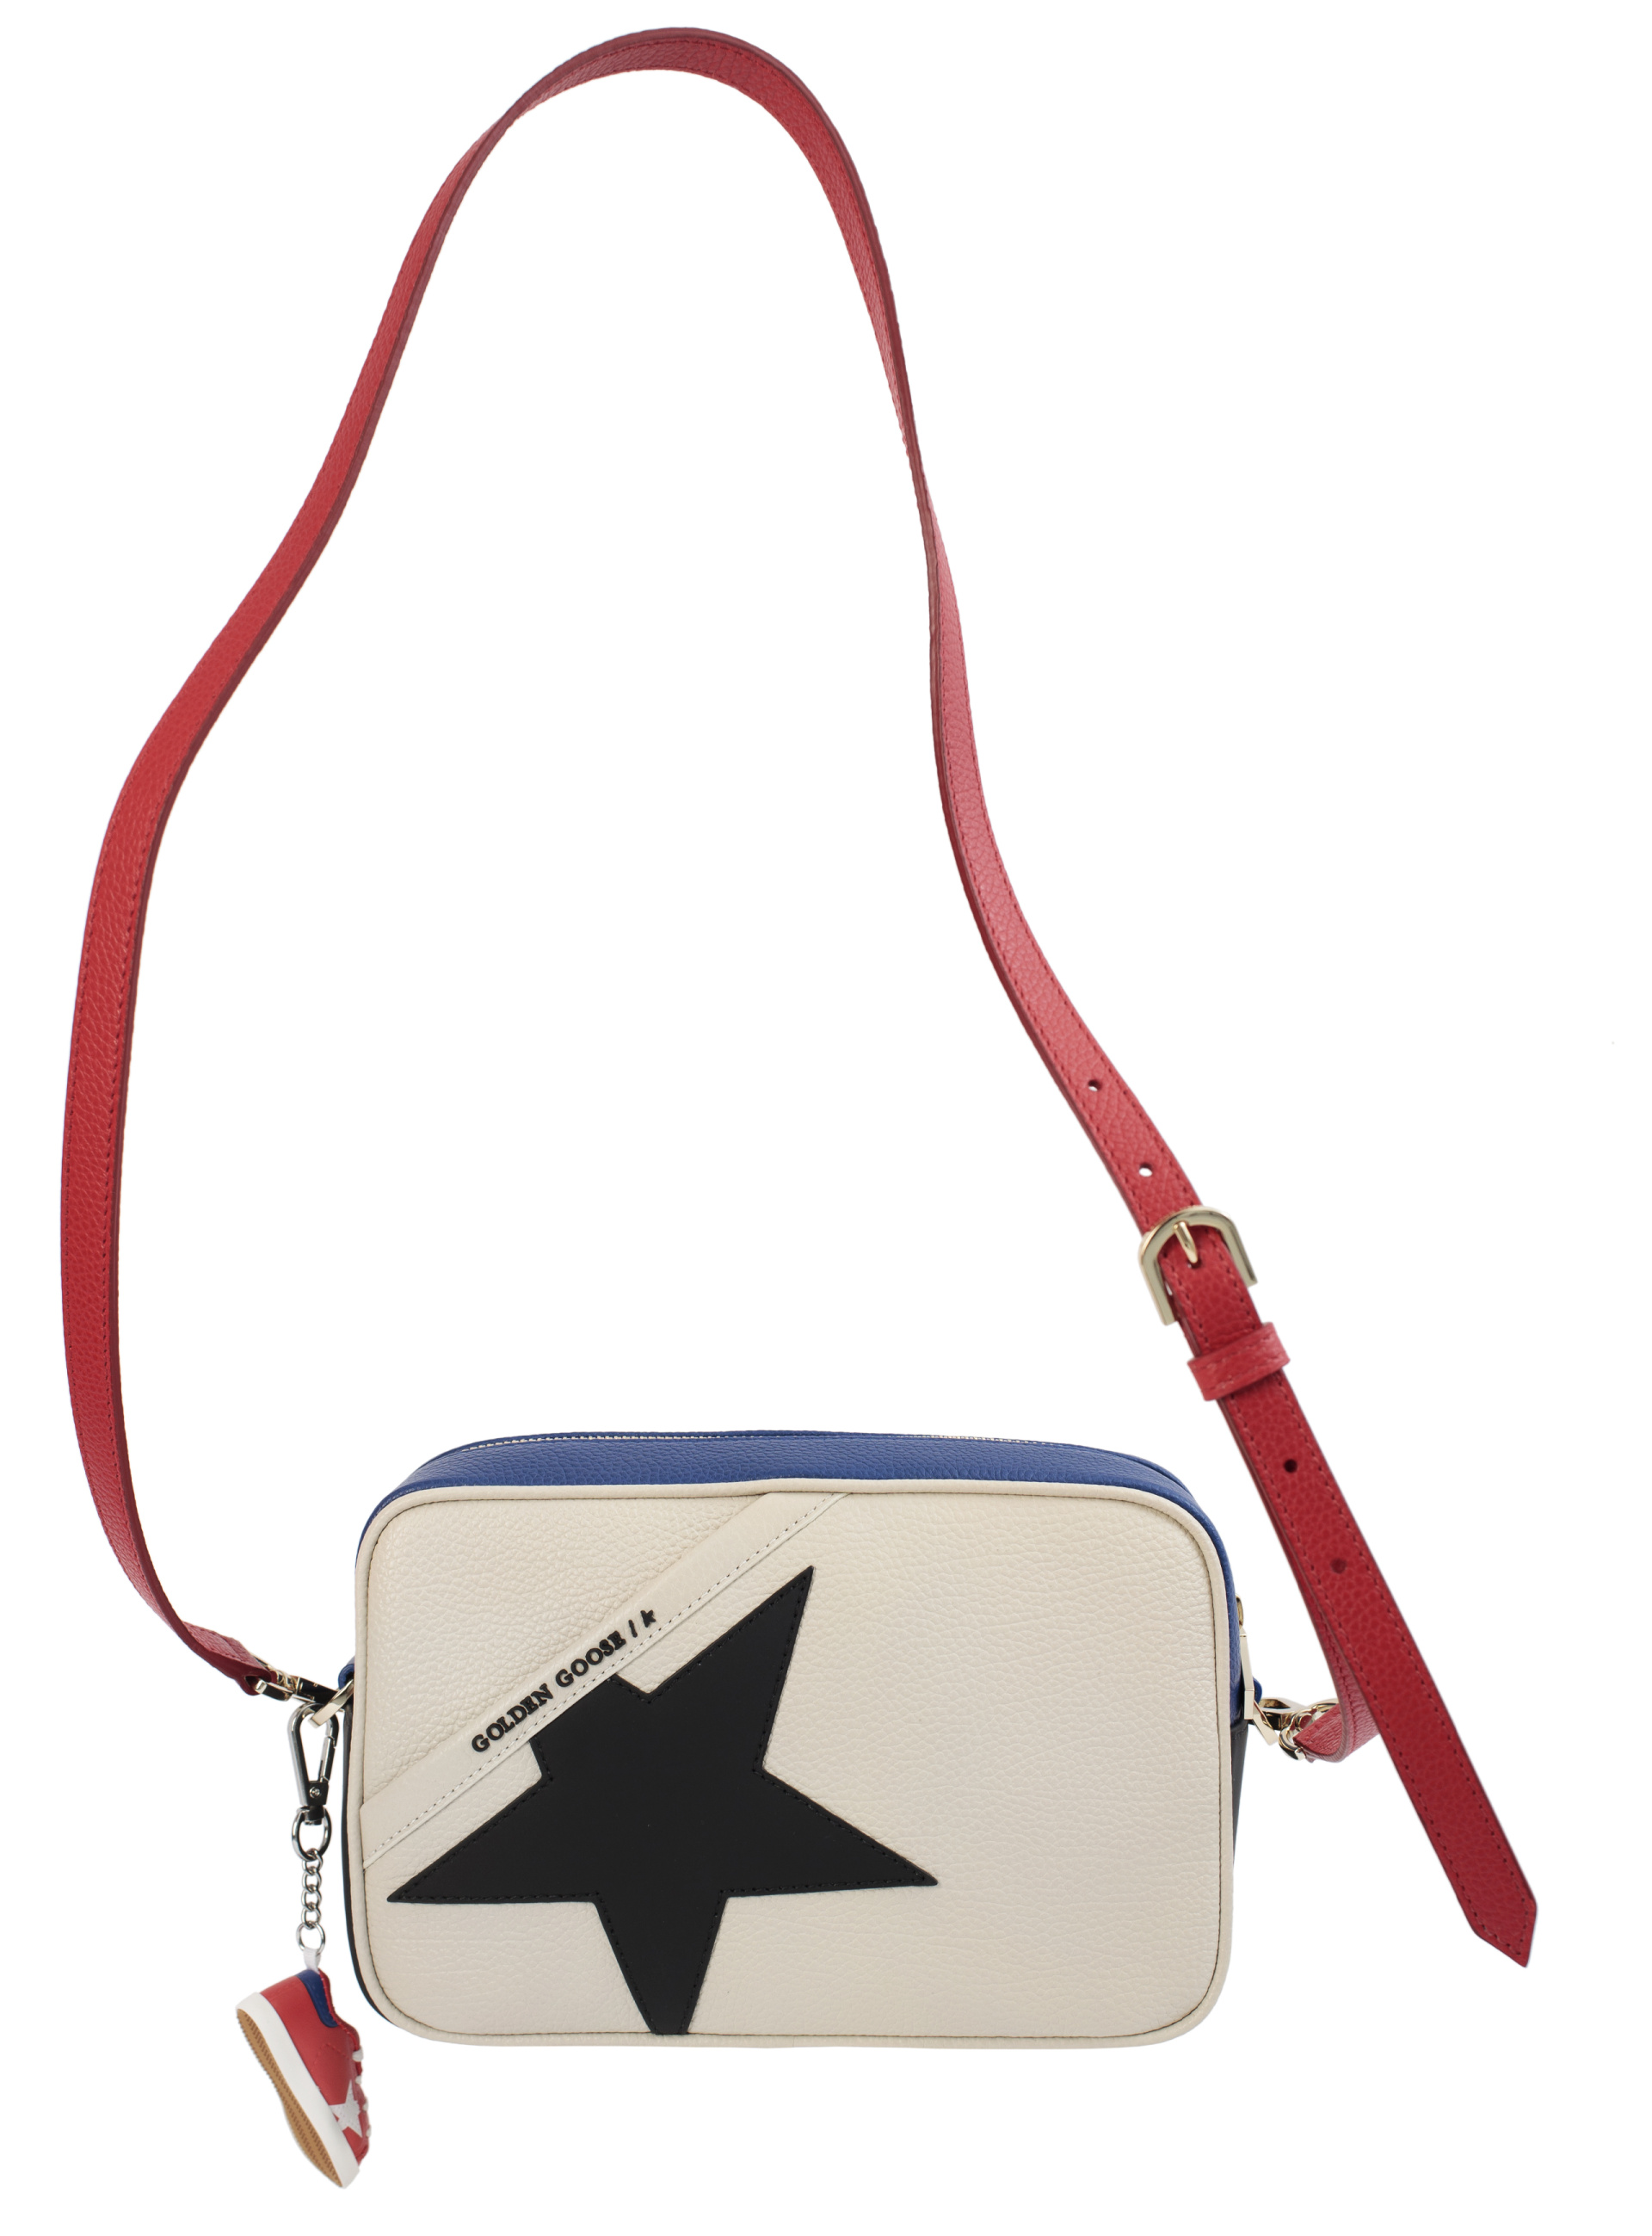 Golden Goose Star Leather crossbody bag